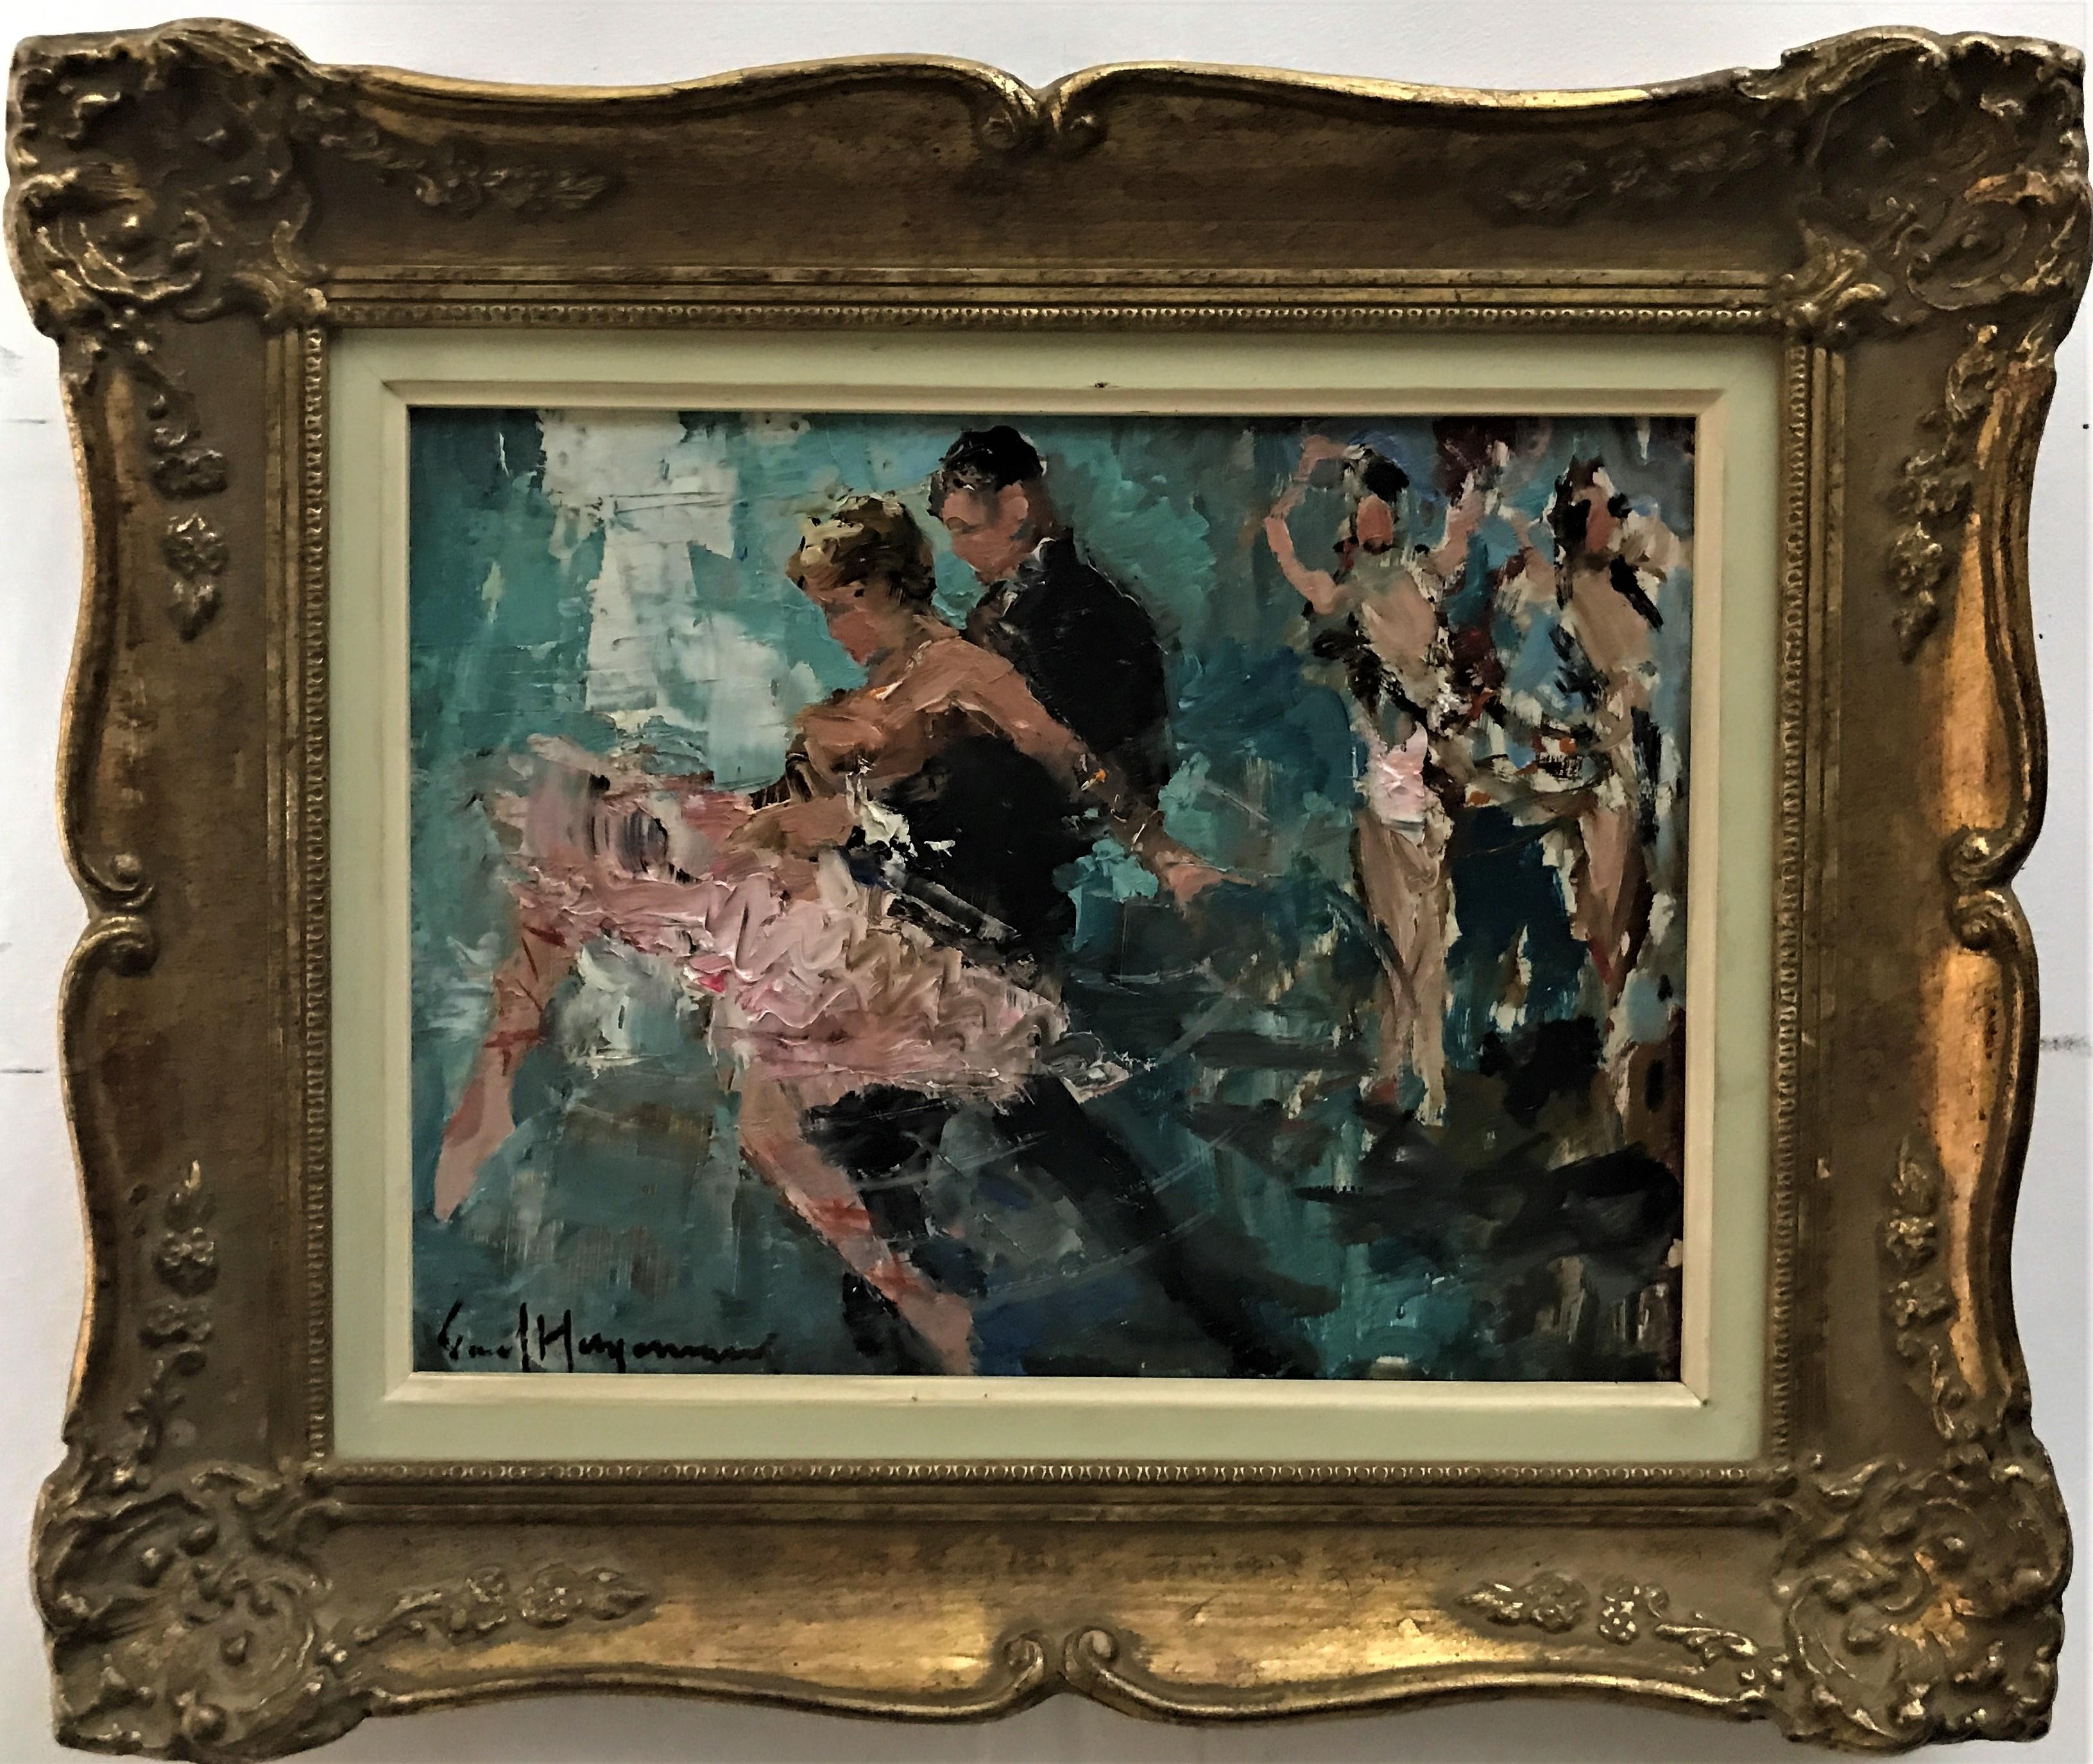 La Danse, Oil on Panel, Impressionist, Latin-style dancing, 20th Century - Painting by Paul Hagemans